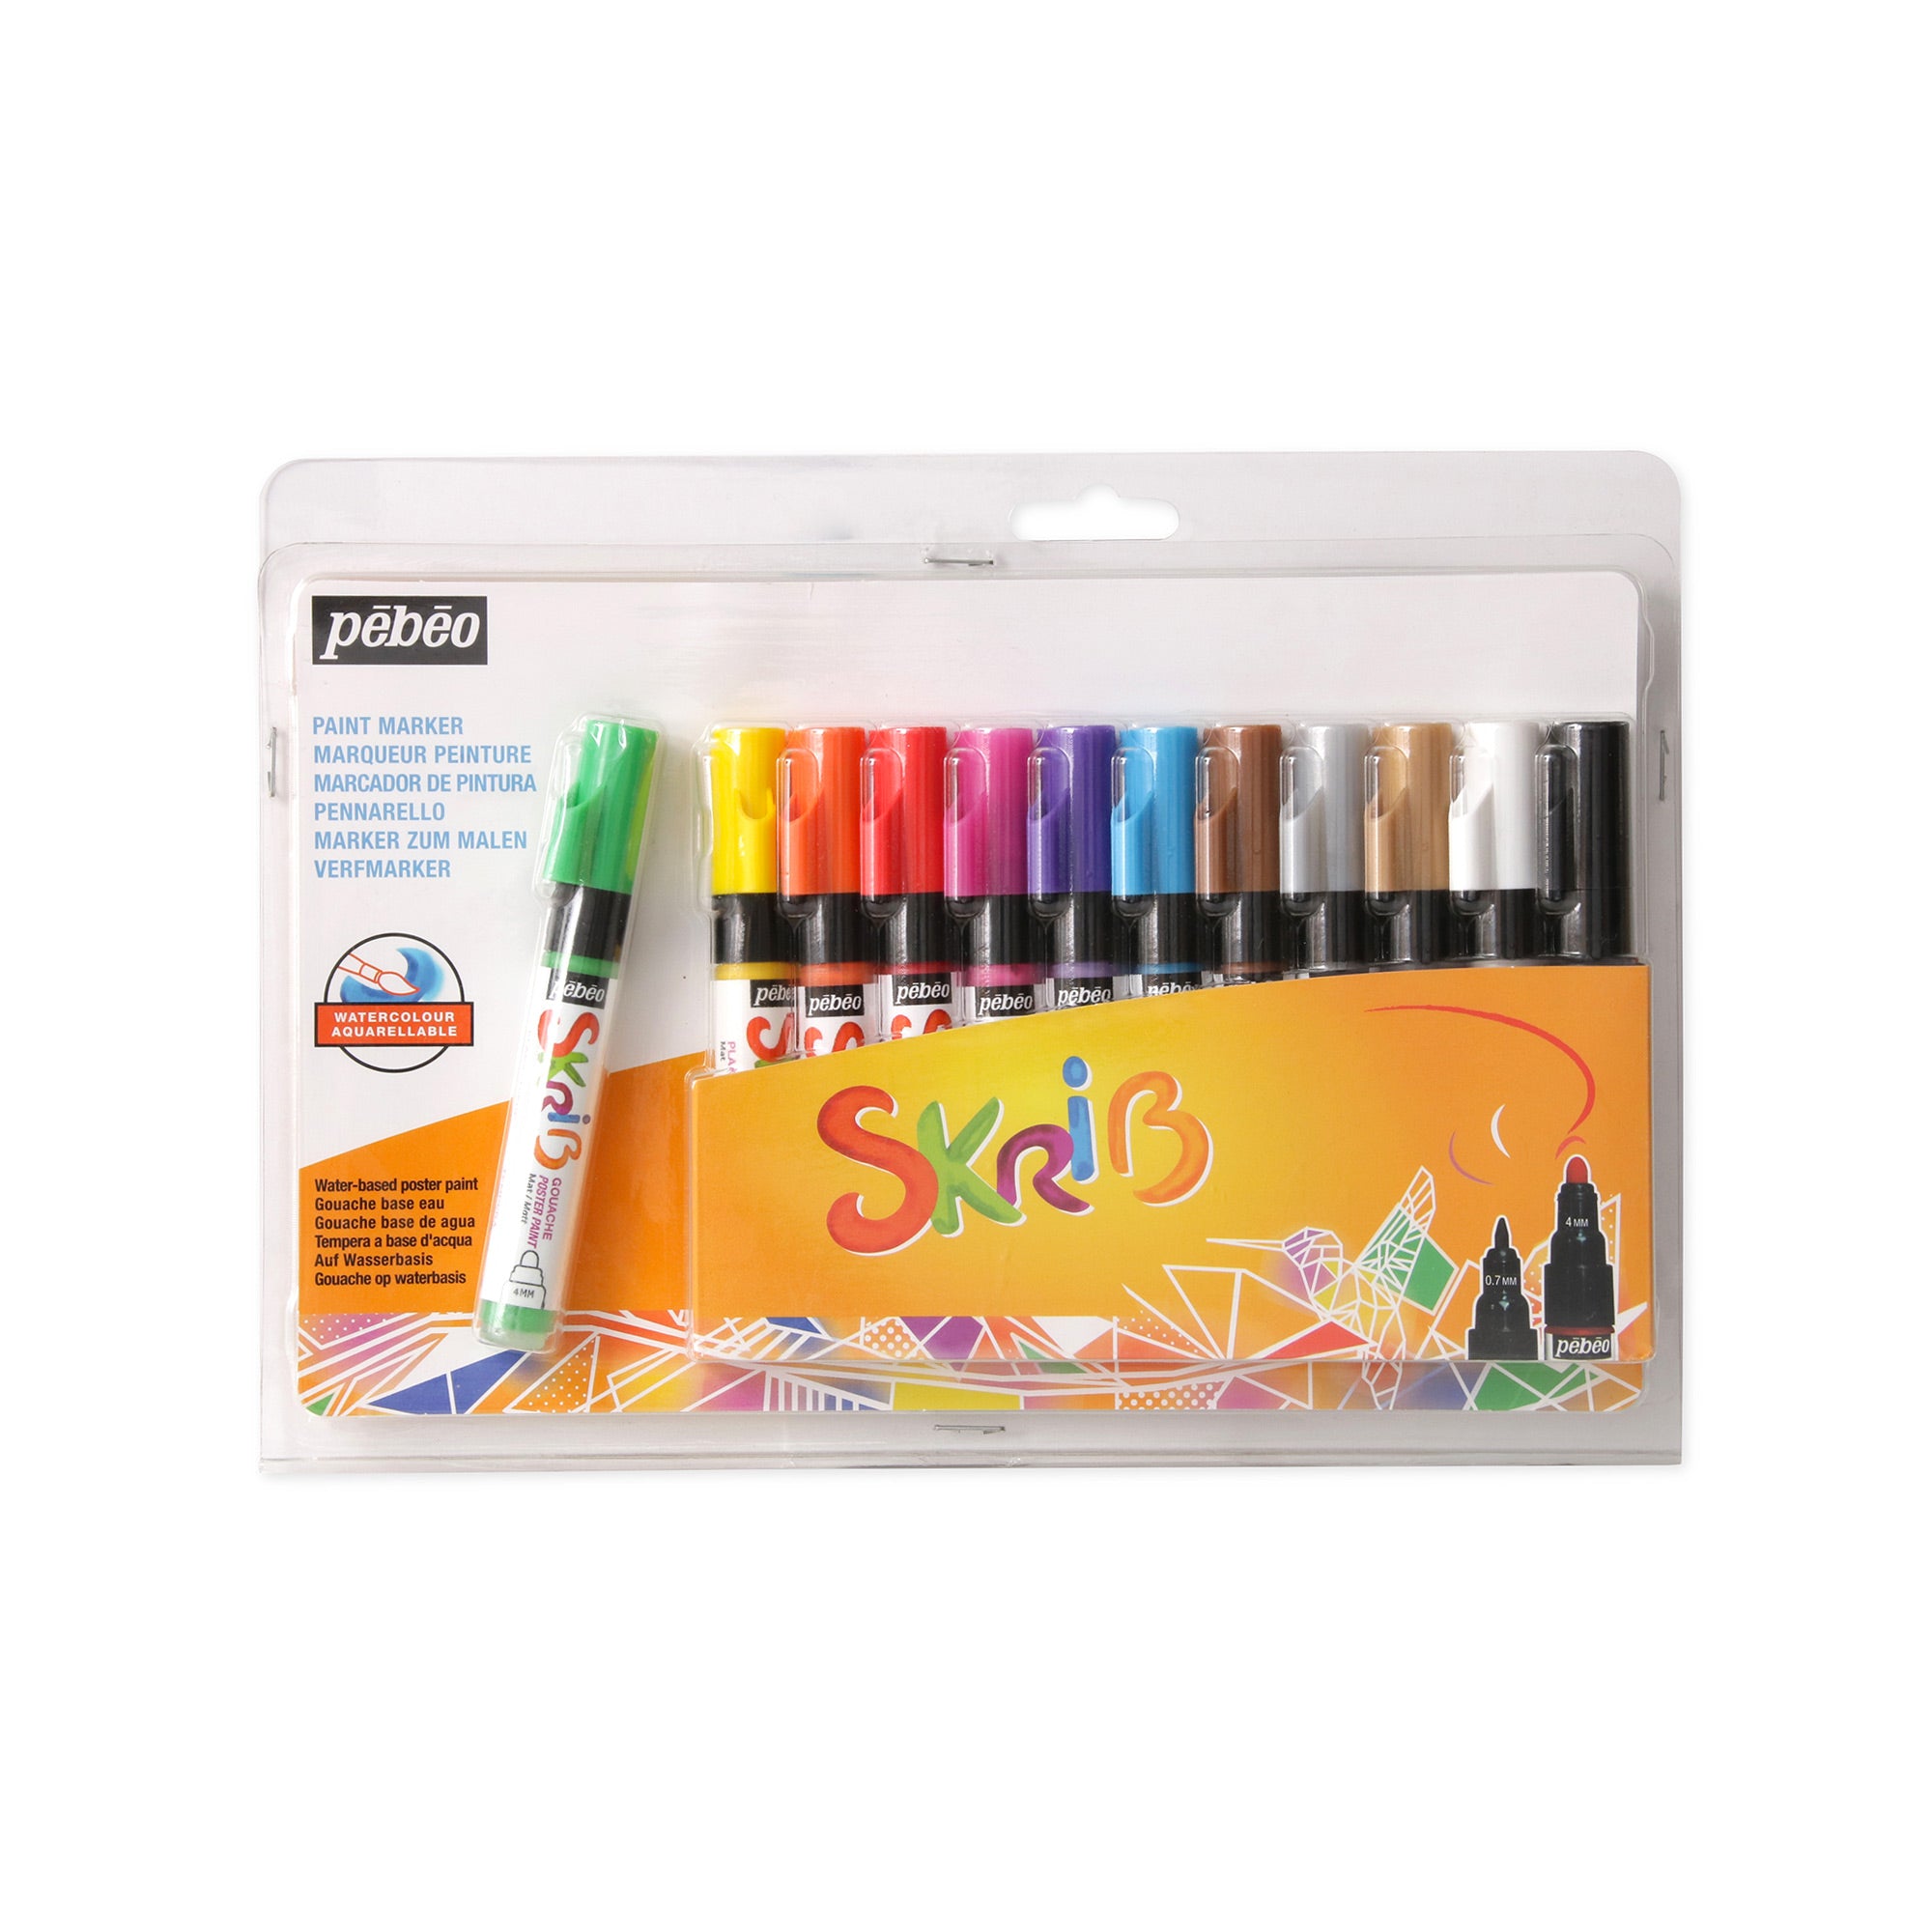 Skrib Acrylic Paint Markers - Classic (set of 12)